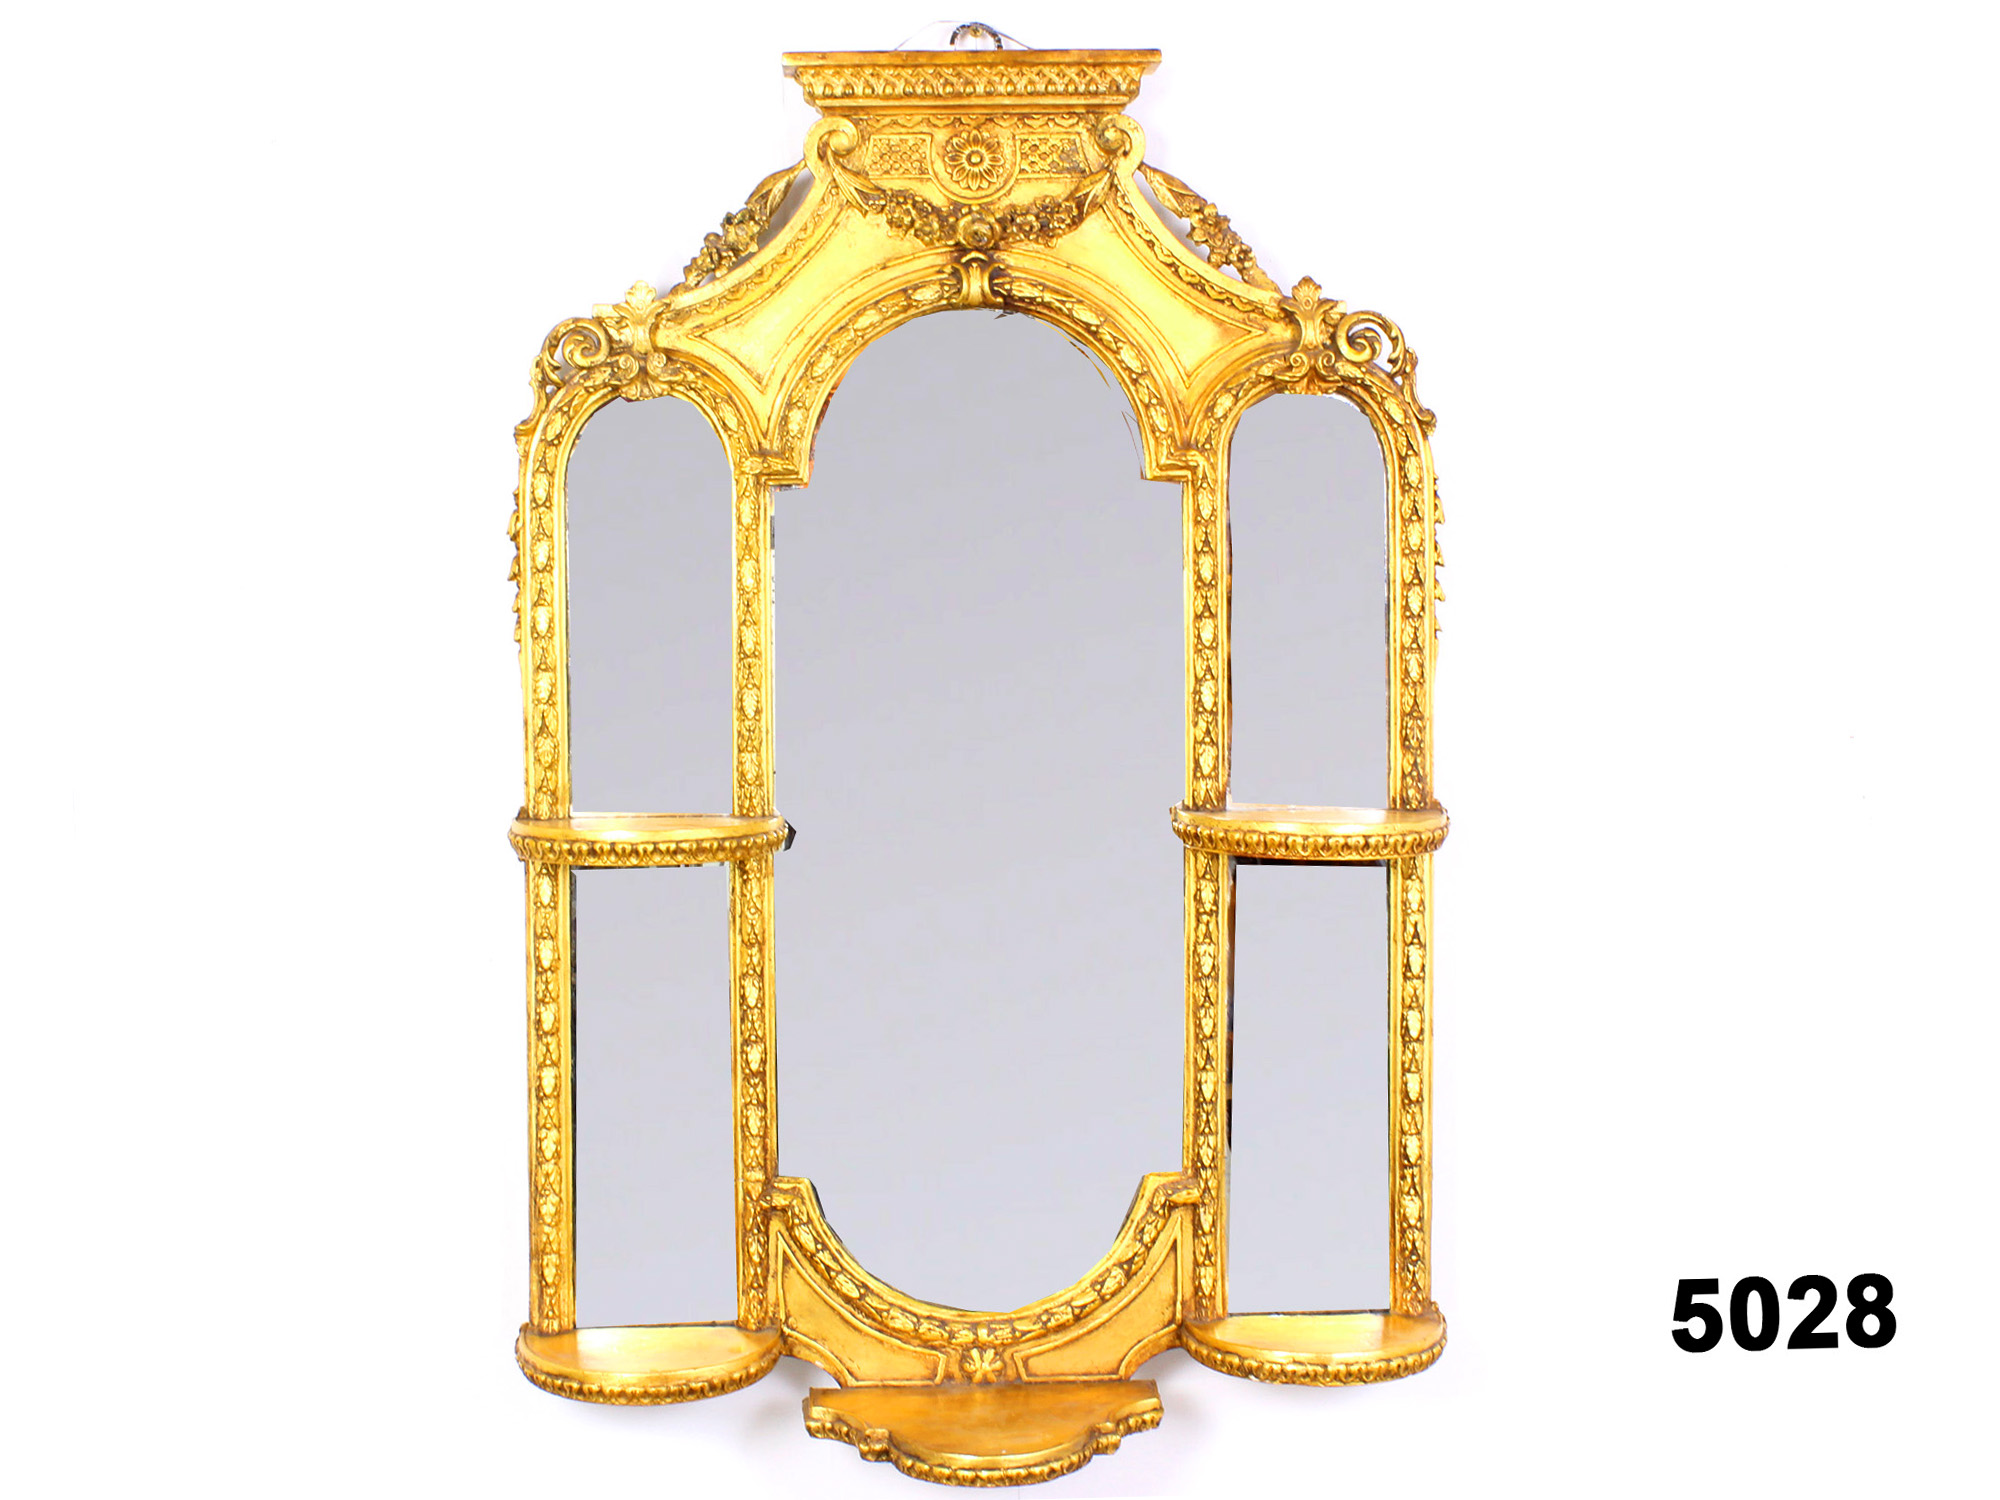 19th Century Gilt Wall Mirror